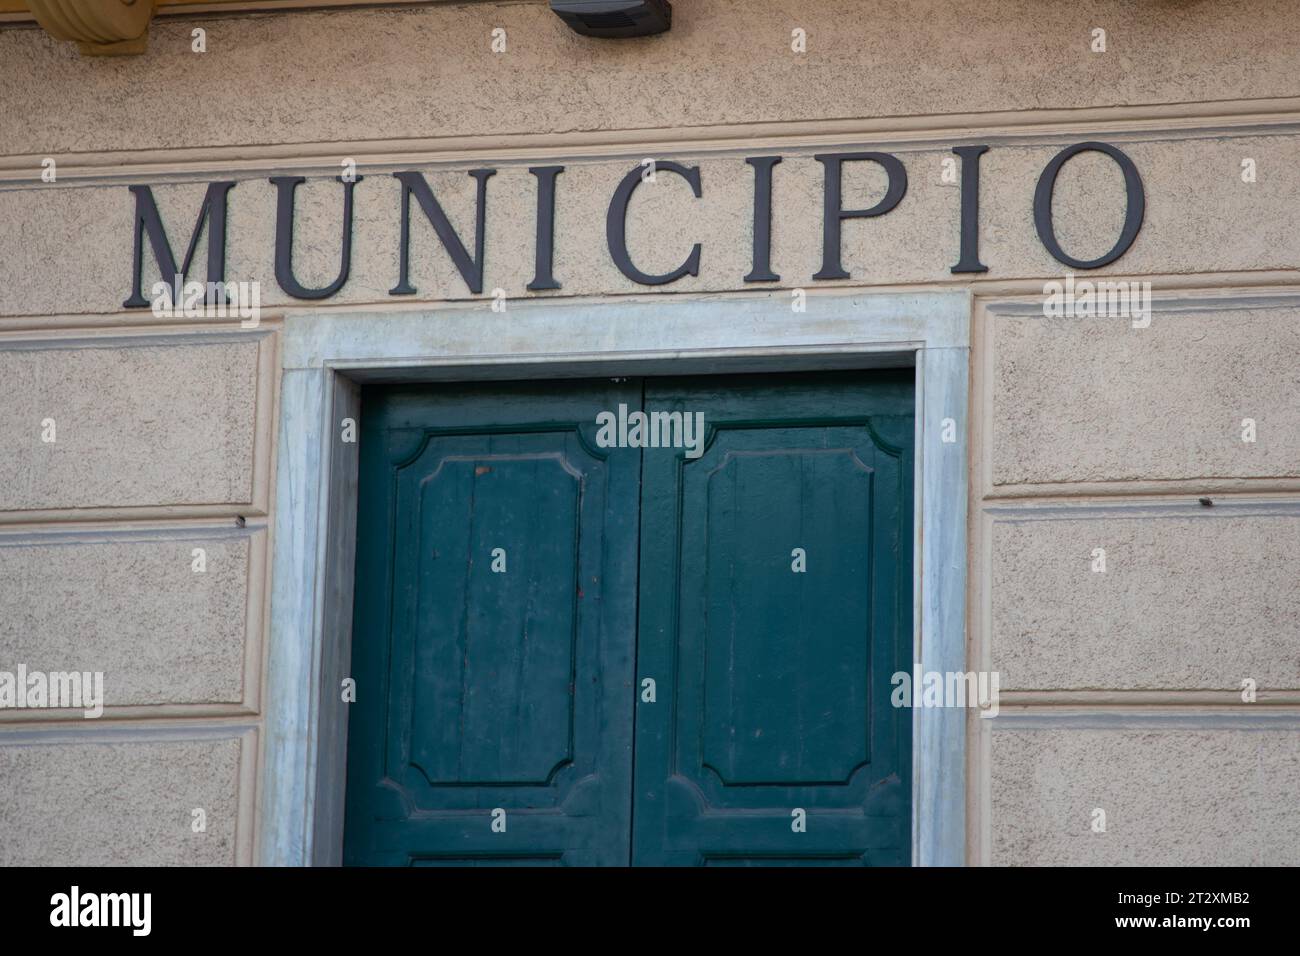 municipio italian text sign means city Hall on facade wall in Italy Stock Photo